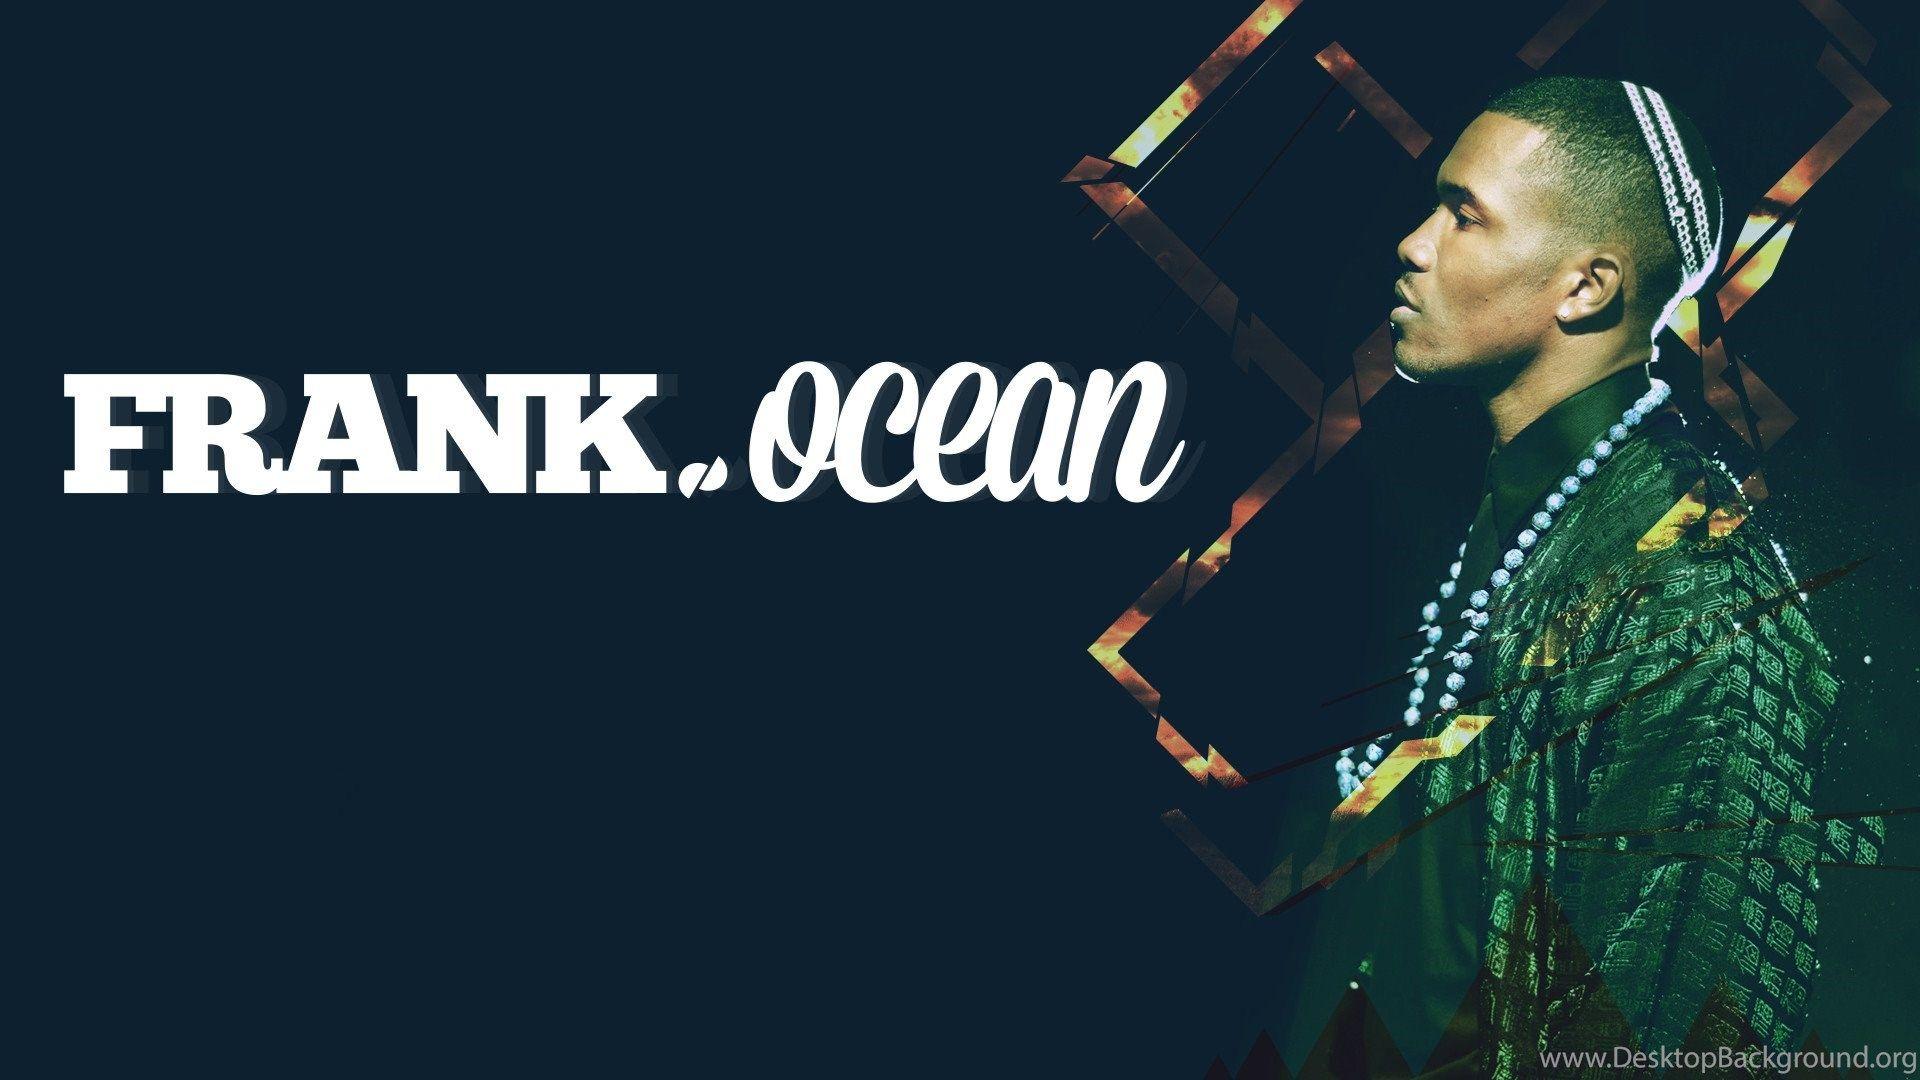 frank ocean channel mp3 download free